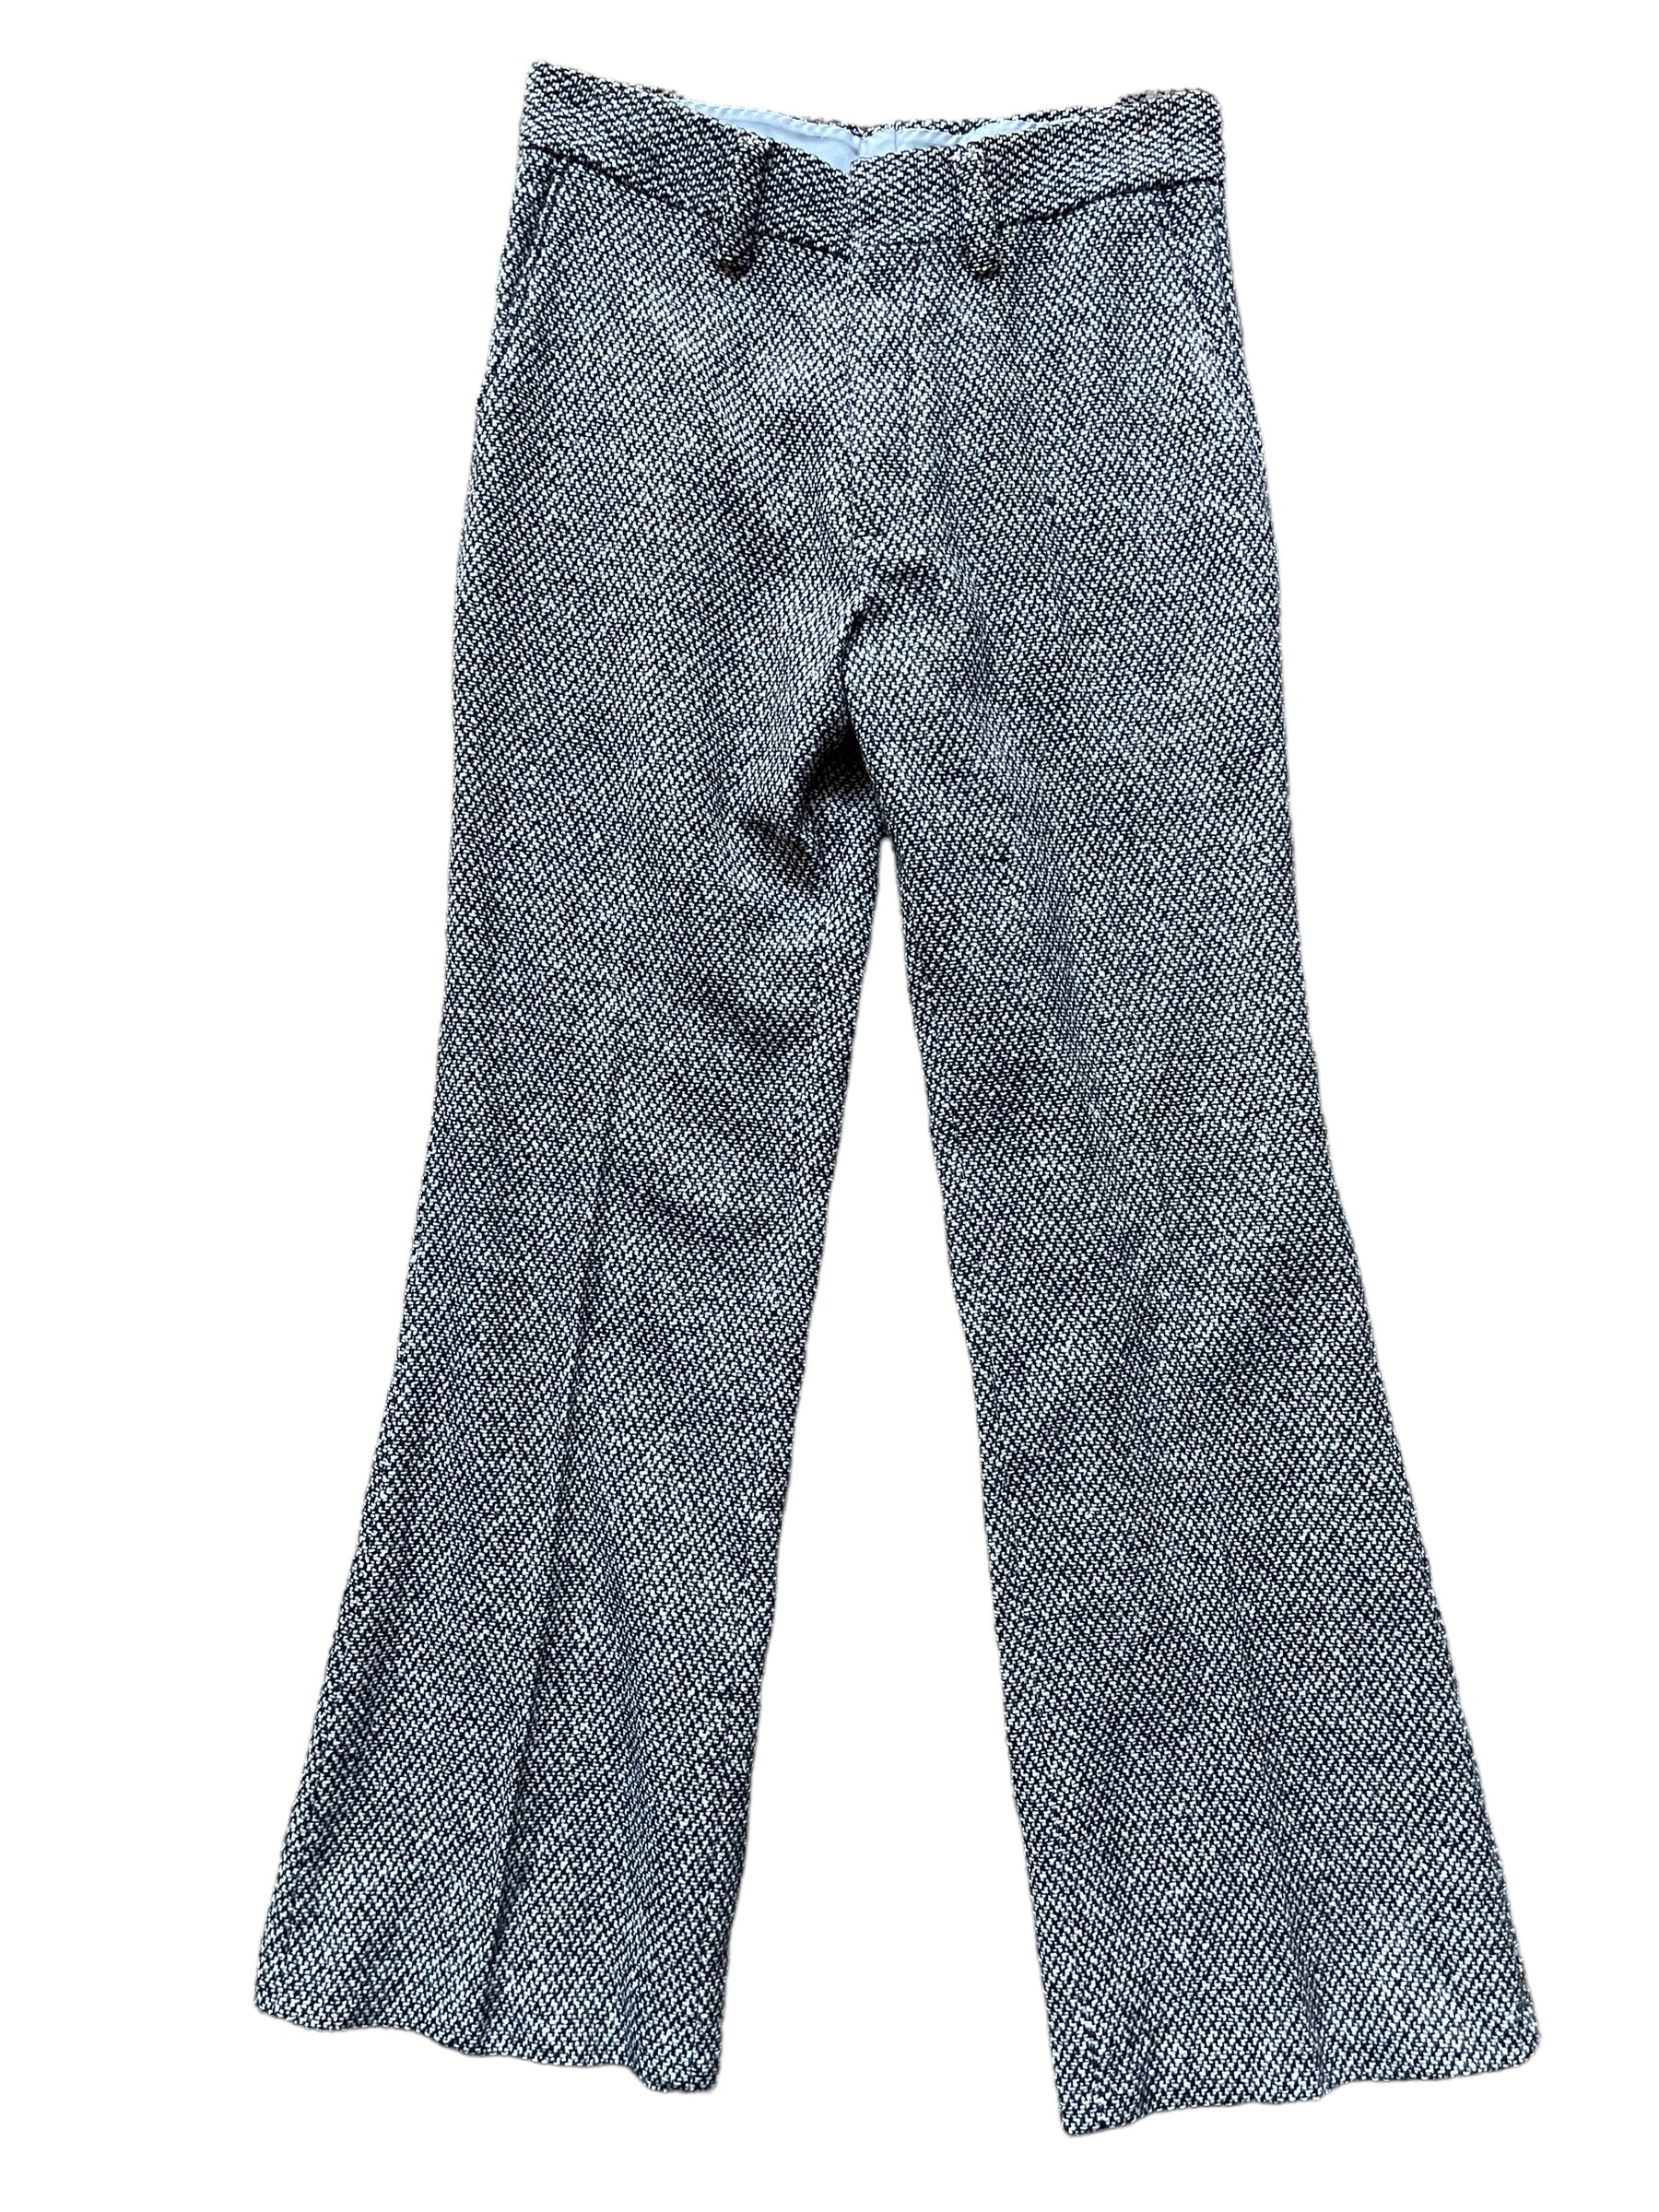 Full front view of Vintage 1970s Deadstock Wool Blend Tweed Trousers W30 | Barn Owl Vintage Seattle | Vintage Trousers